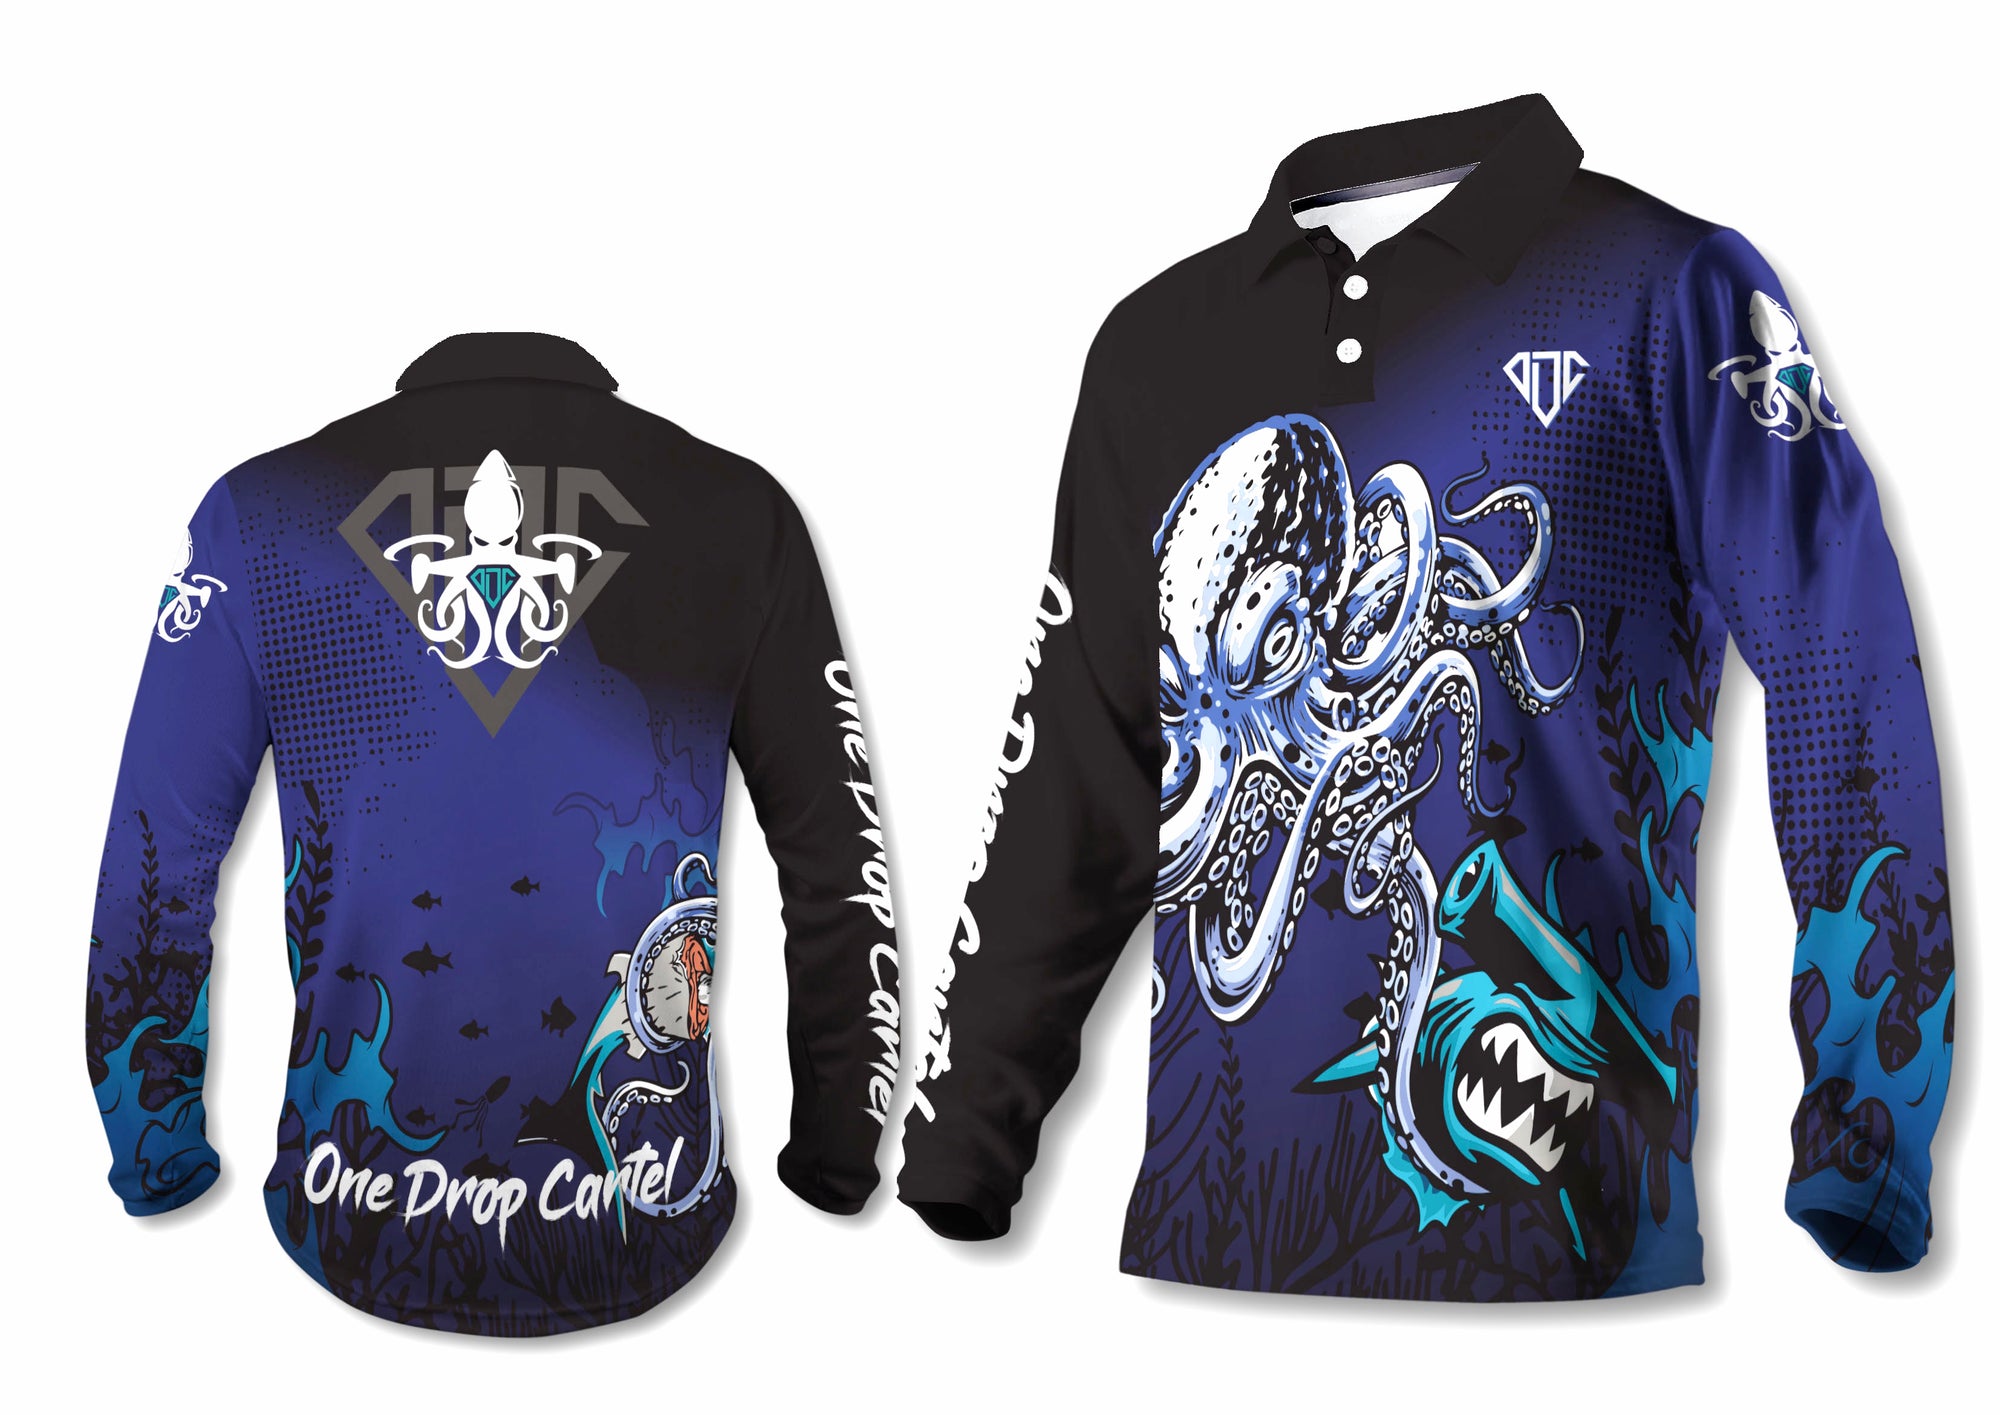 The Kraken Long-Sleeved Fishing Shirt - One Drop Cartel